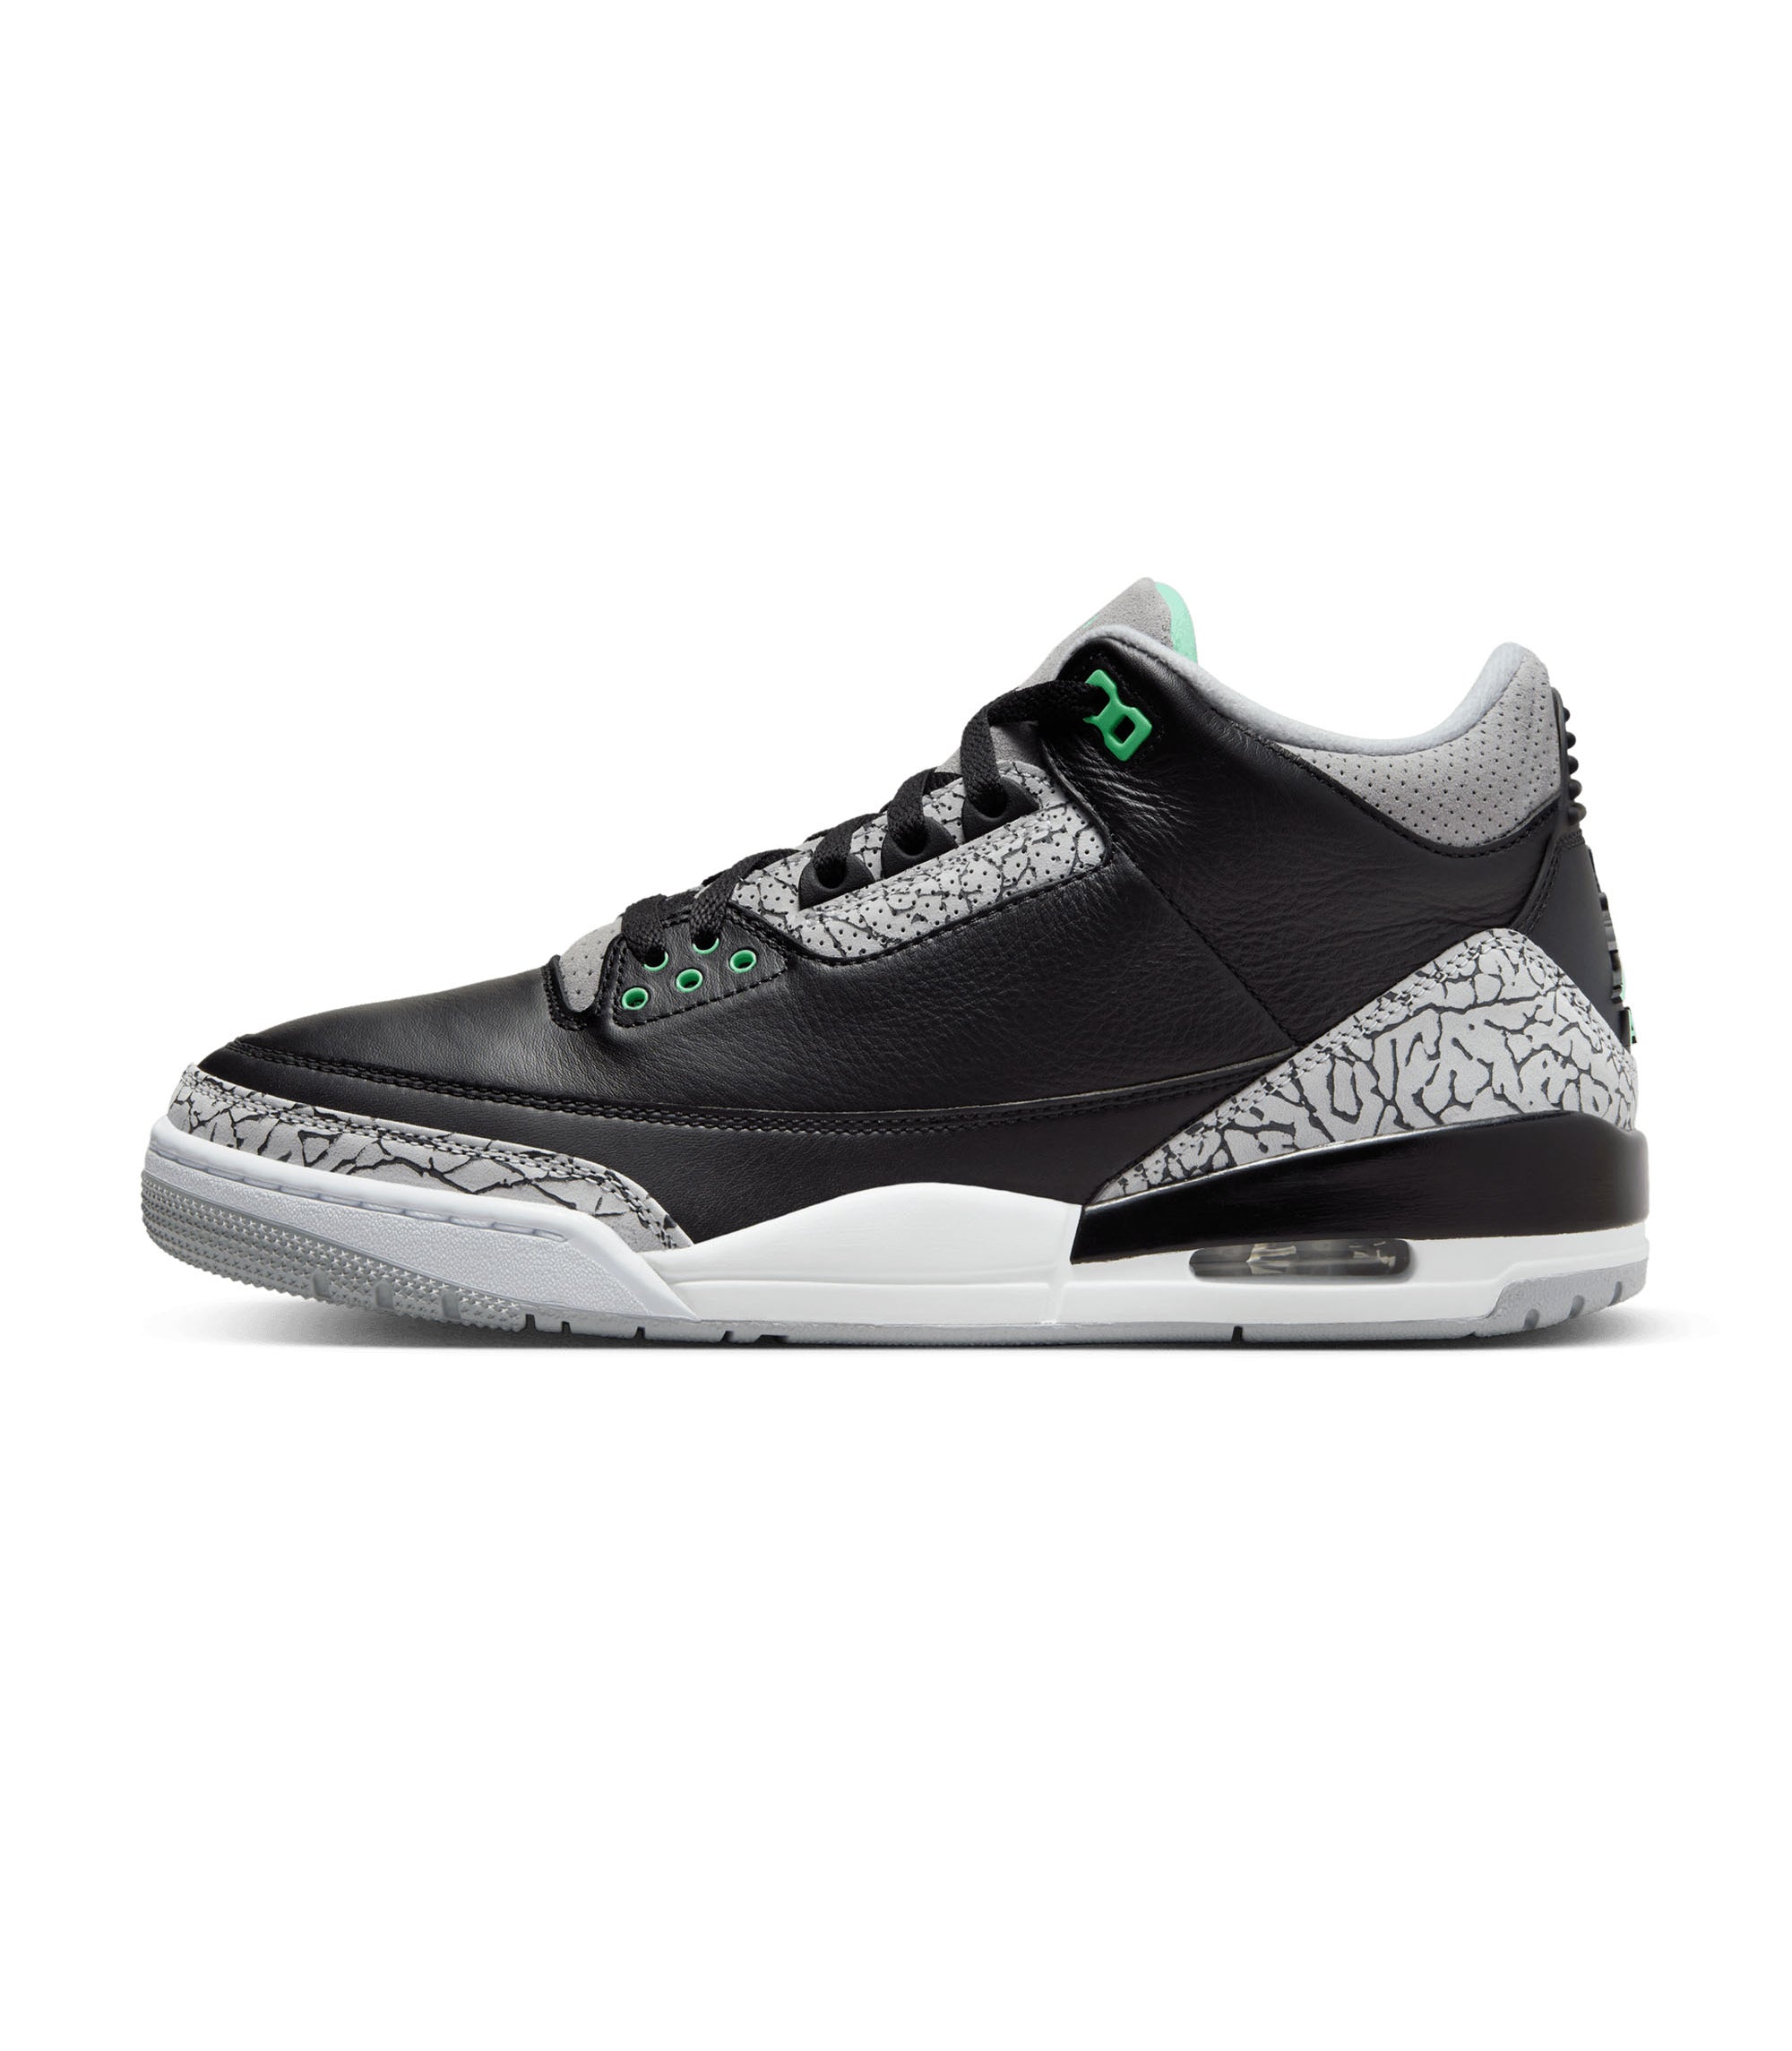 Air Jordan 3 Retro - Black / Green Glow / Wolf Grey